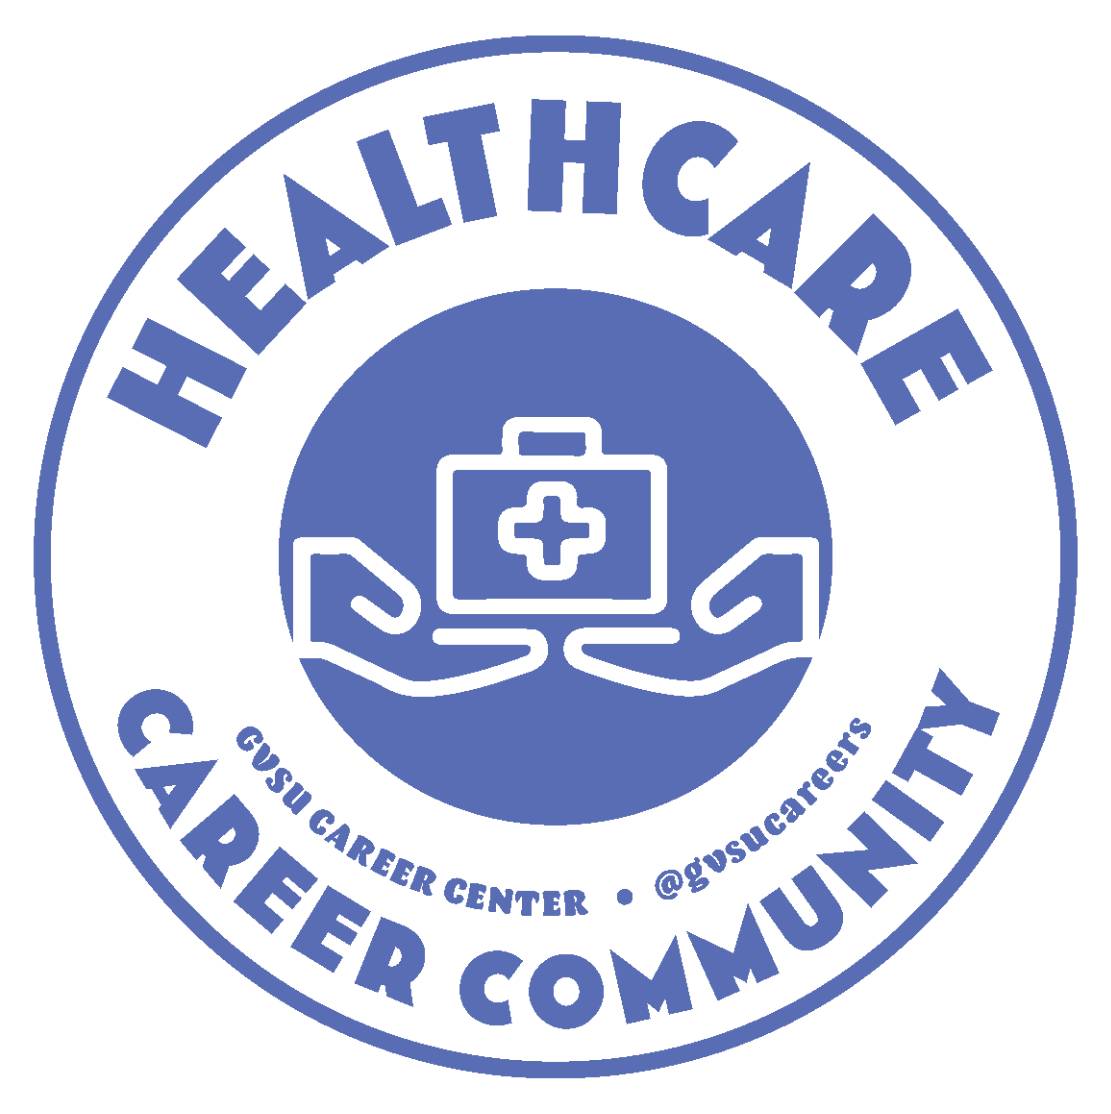 healthcare career community